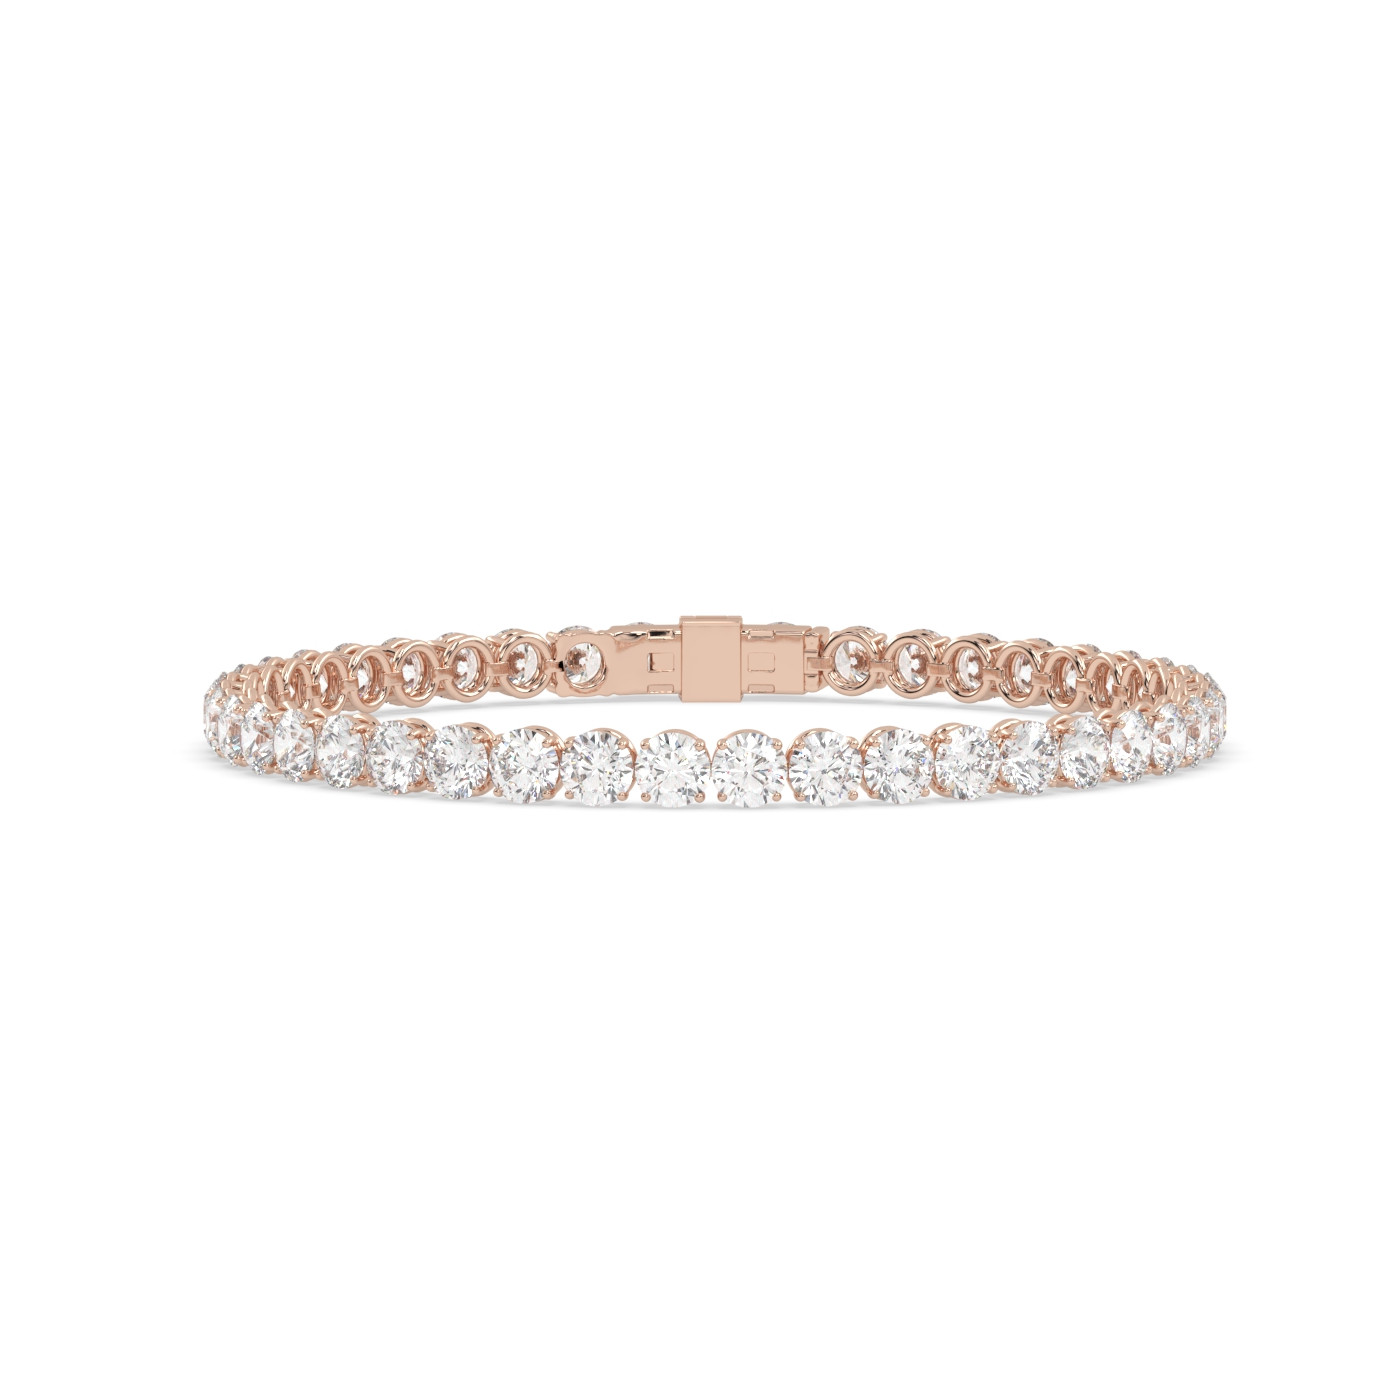 18k rose gold  7.0 carat round diamond tennis bracelet with modern american lock system Photos & images